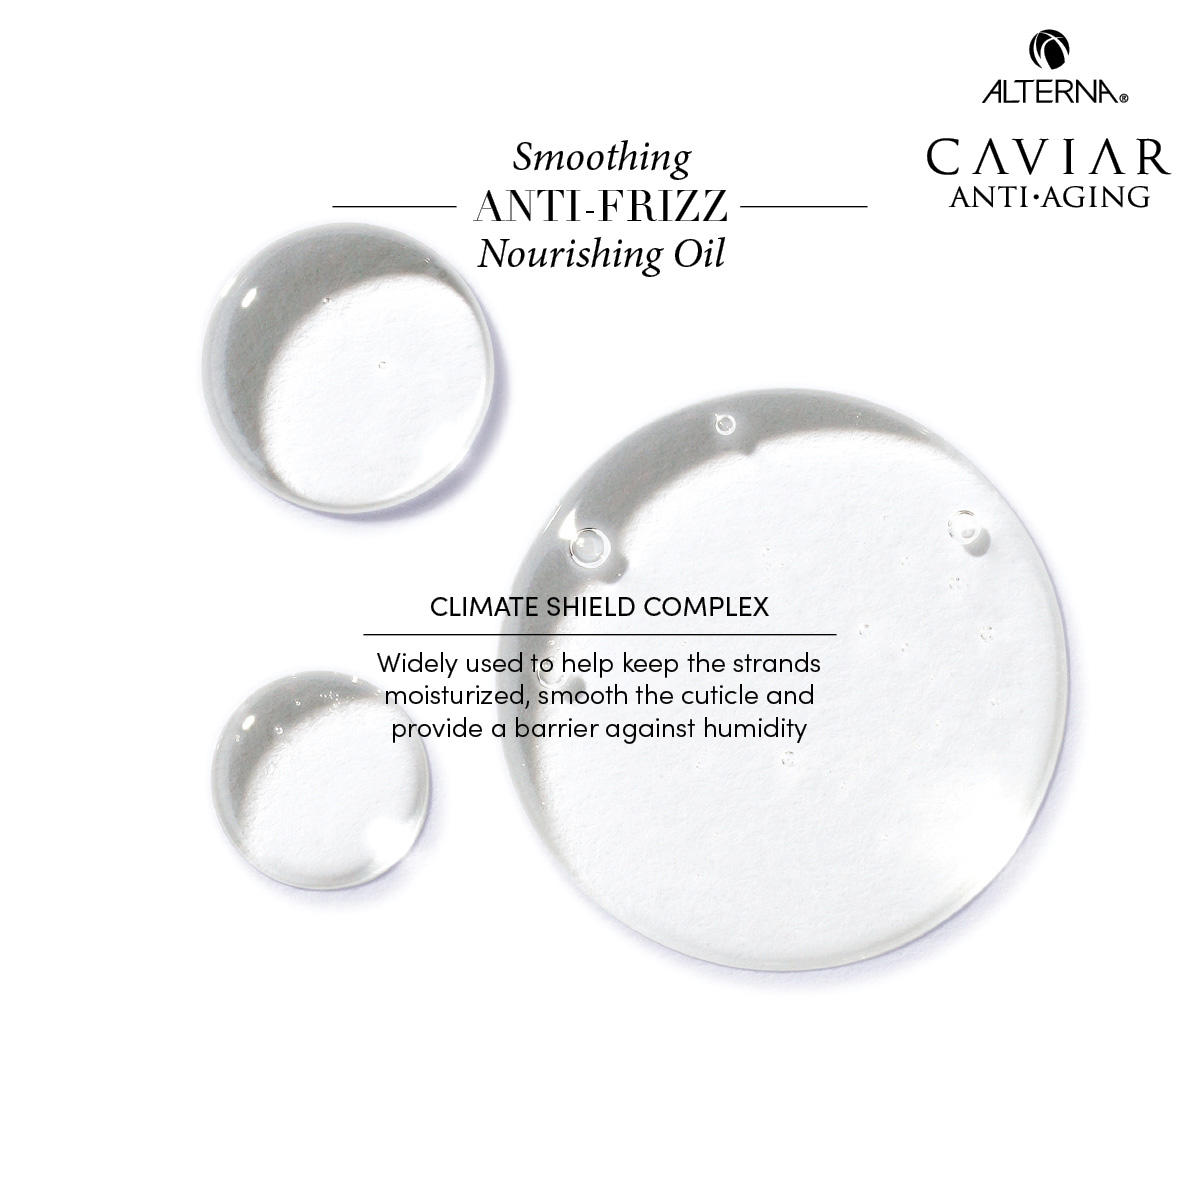 Alterna Caviar Anti-Aging Smoothing Anti-Frizz Nourishing Oil 50 ml - 4